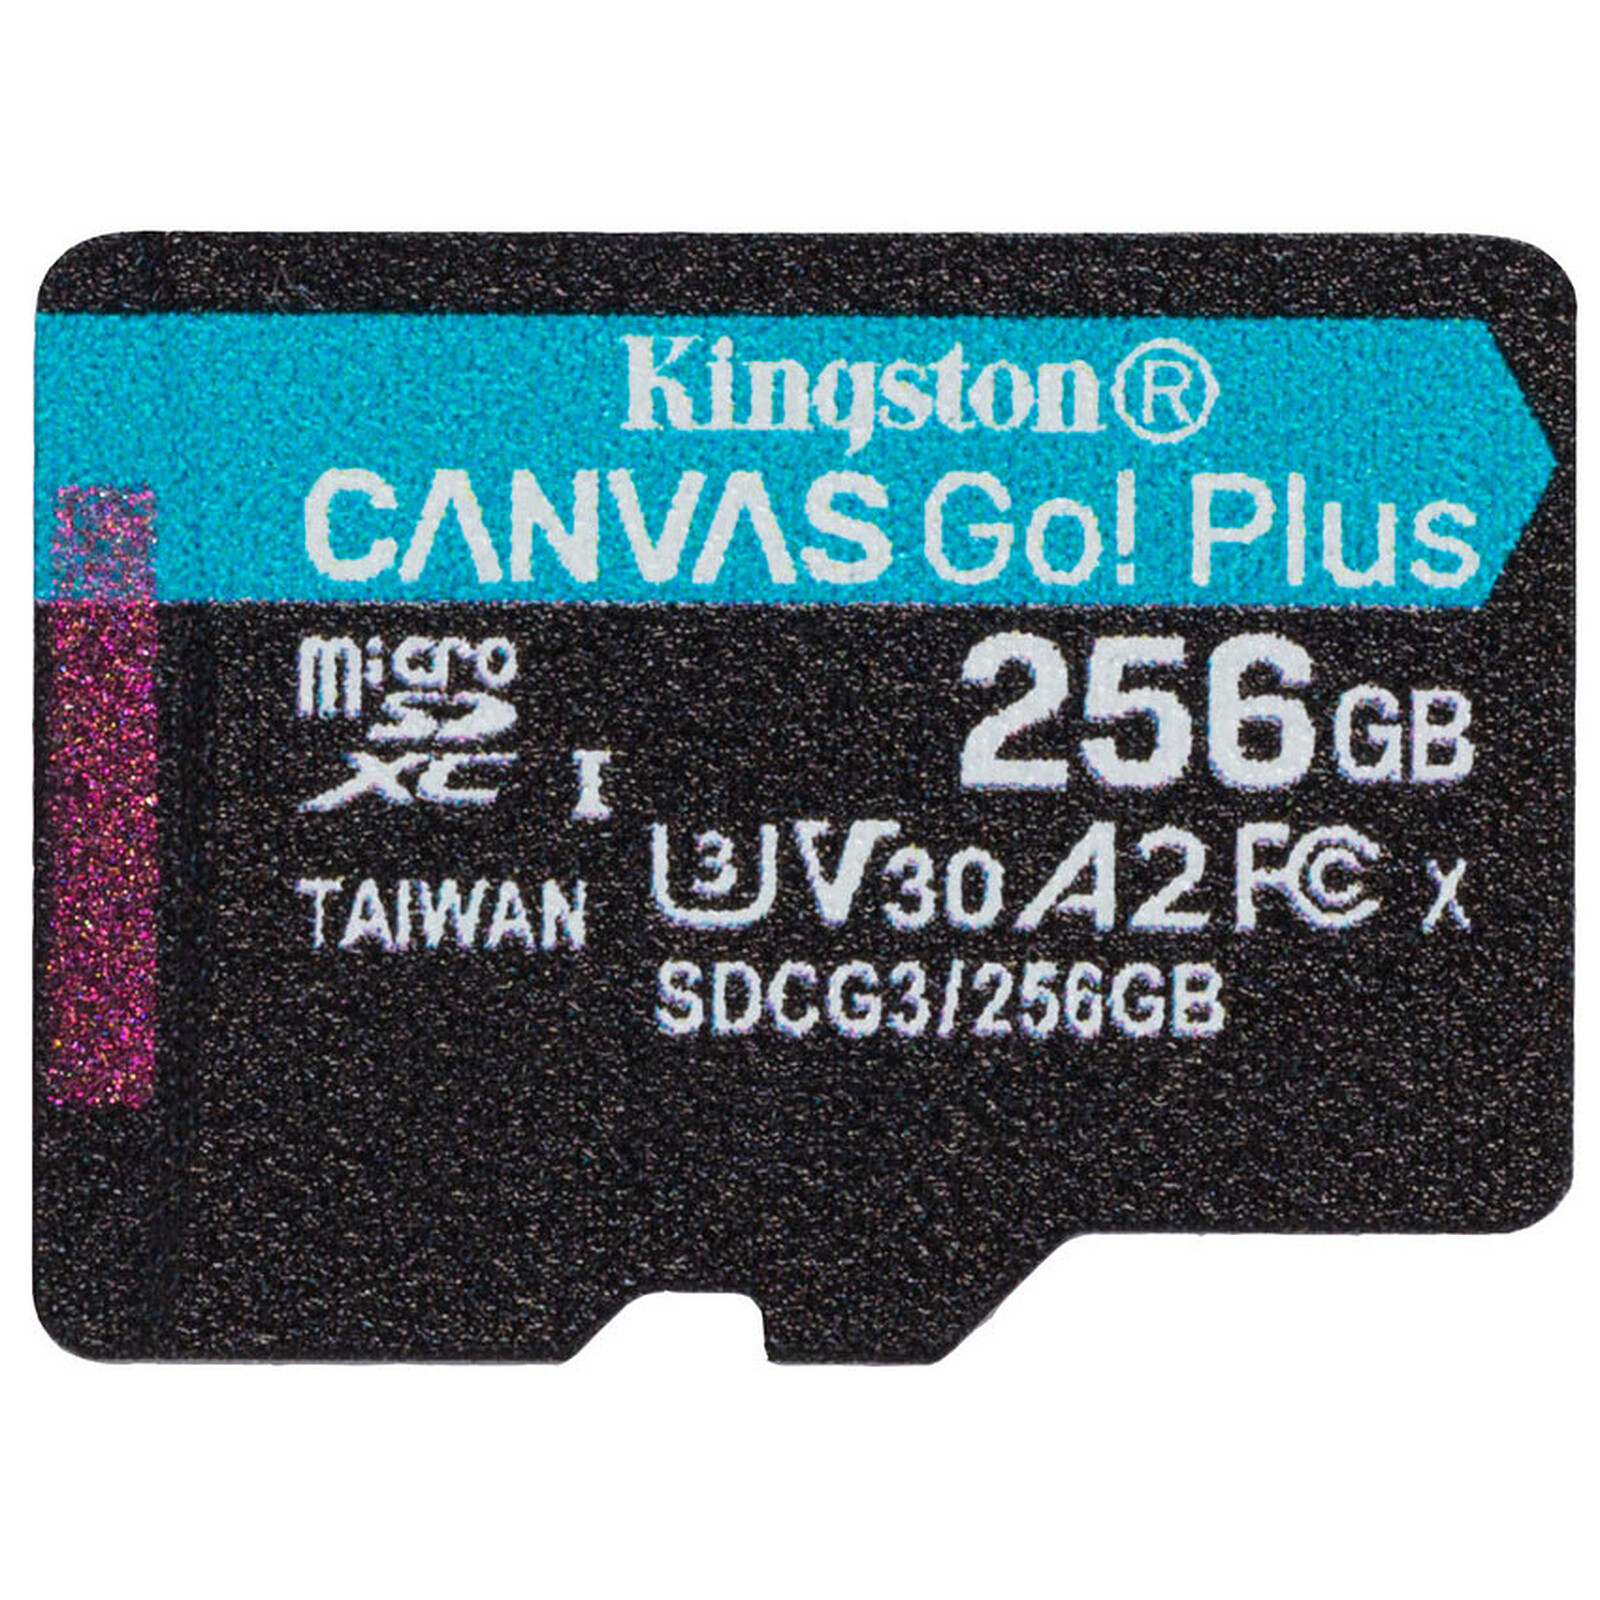 KINGSTON - Carte mémoire microSD Canvas Select Plus 512 Go + adaptateur SD